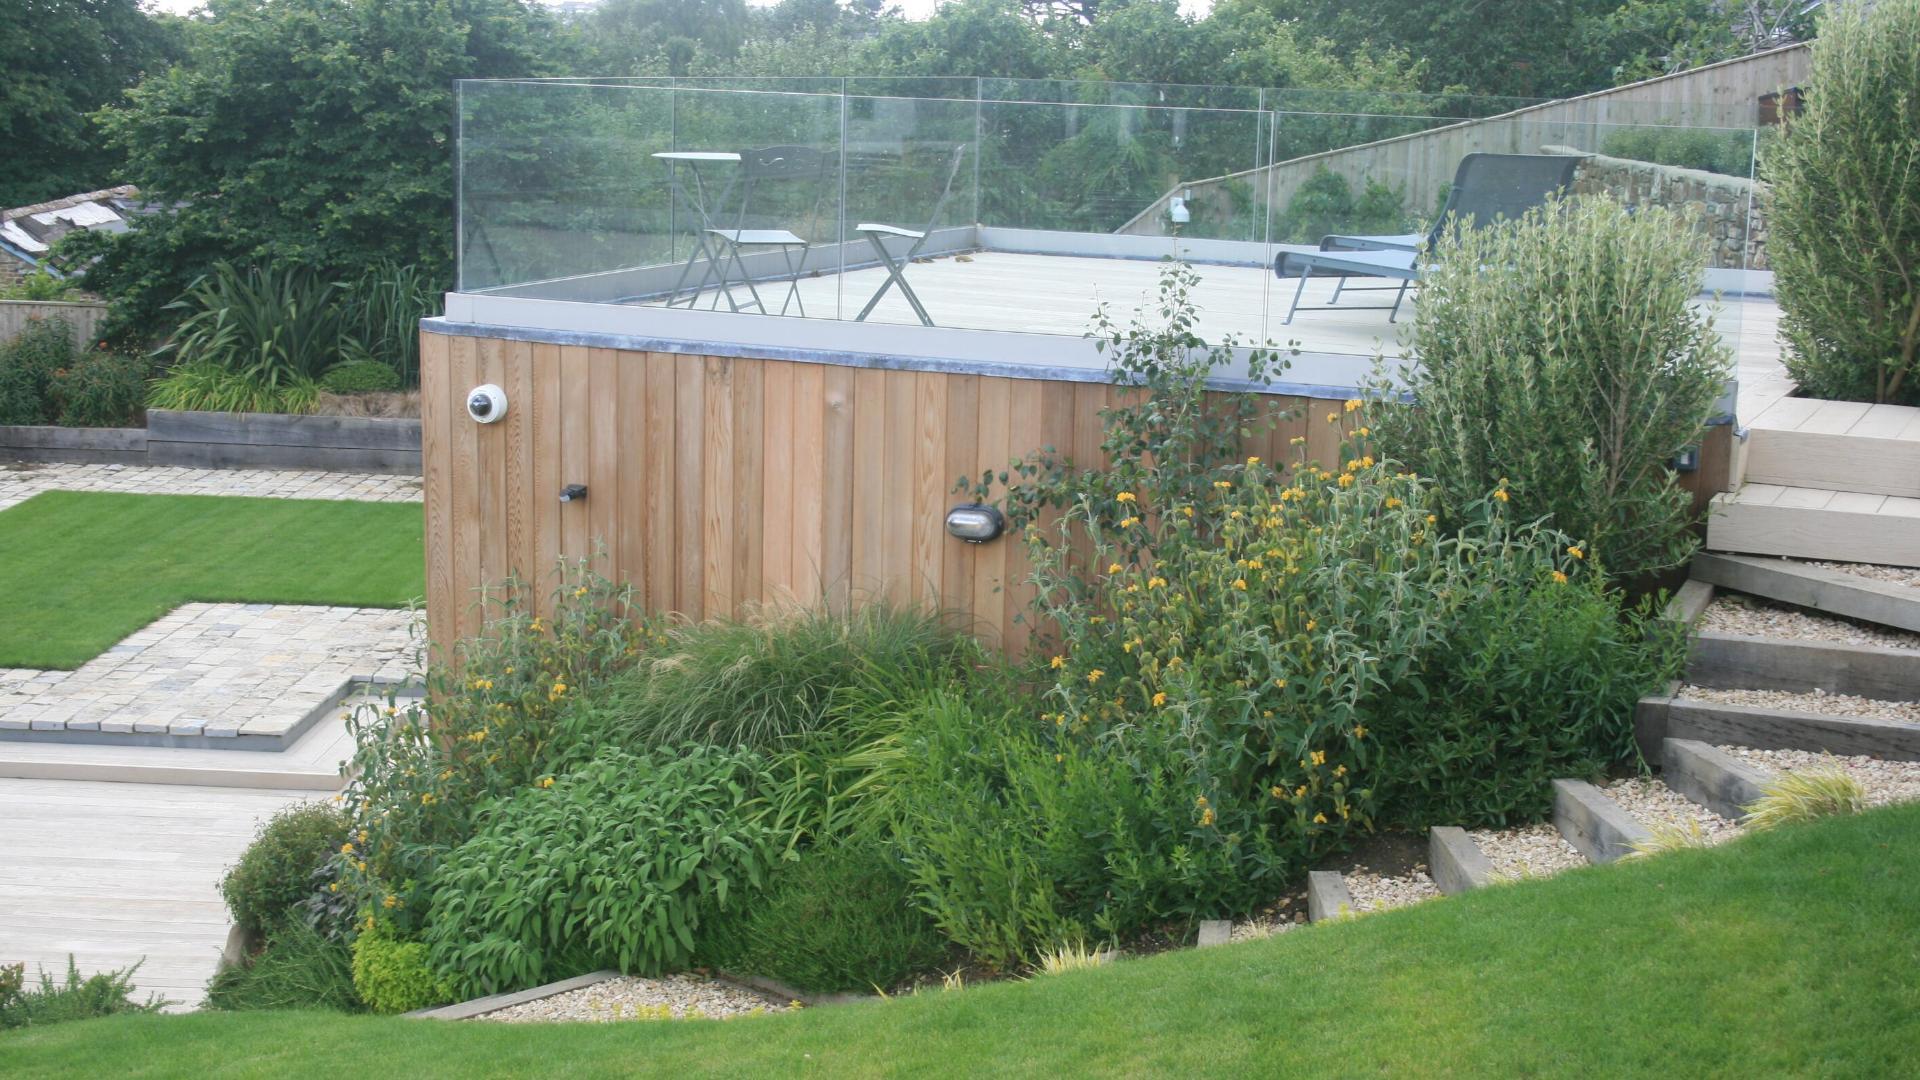 Alison Bockh Garden Design and Landscaping - North Devon - Modern deck over gymnasium overlooking lawned area